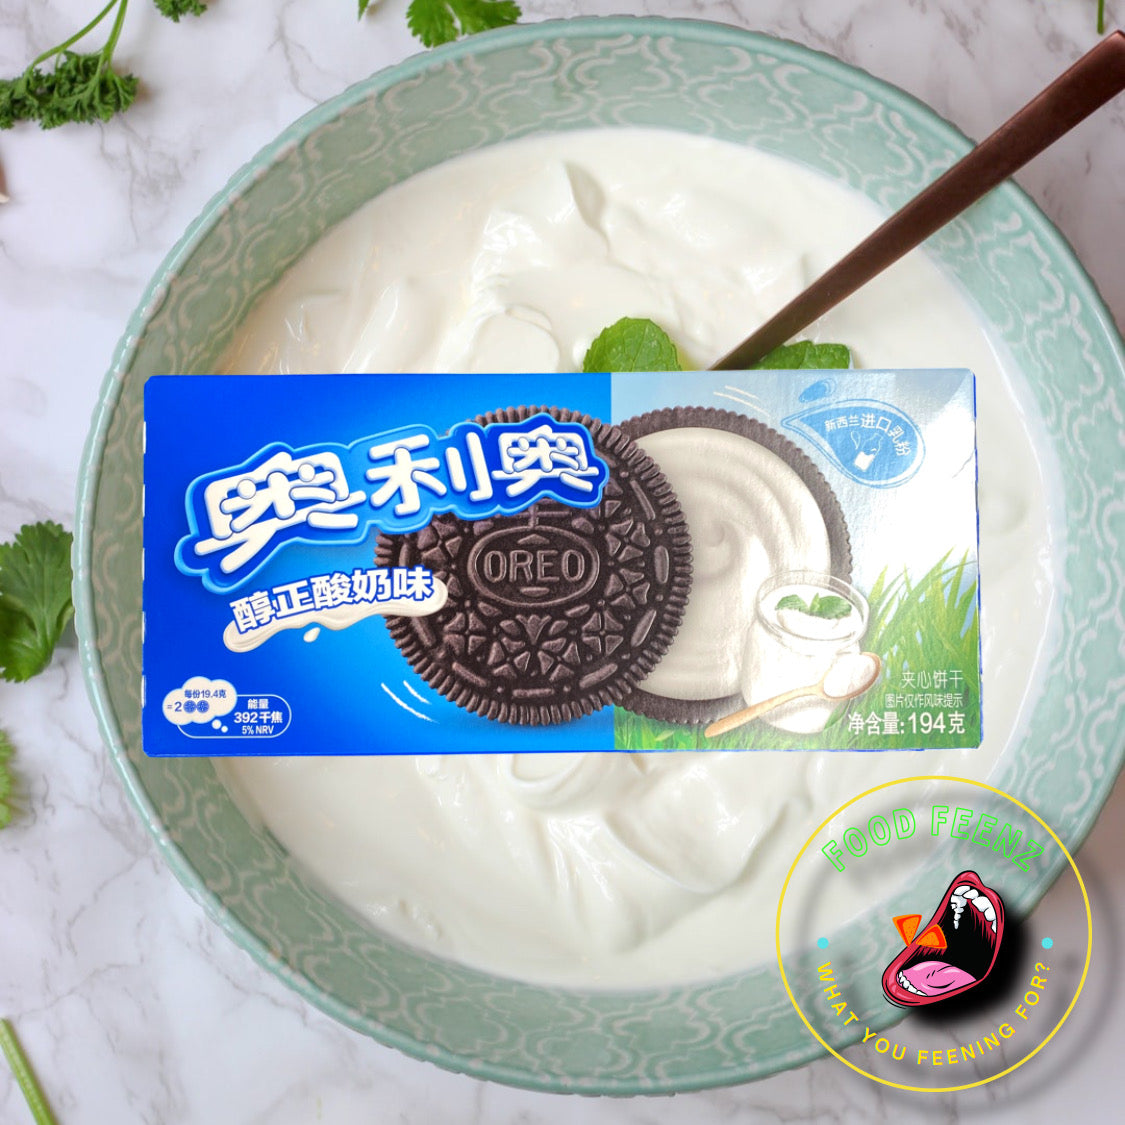 Oreo Yogurt Flavor (China)